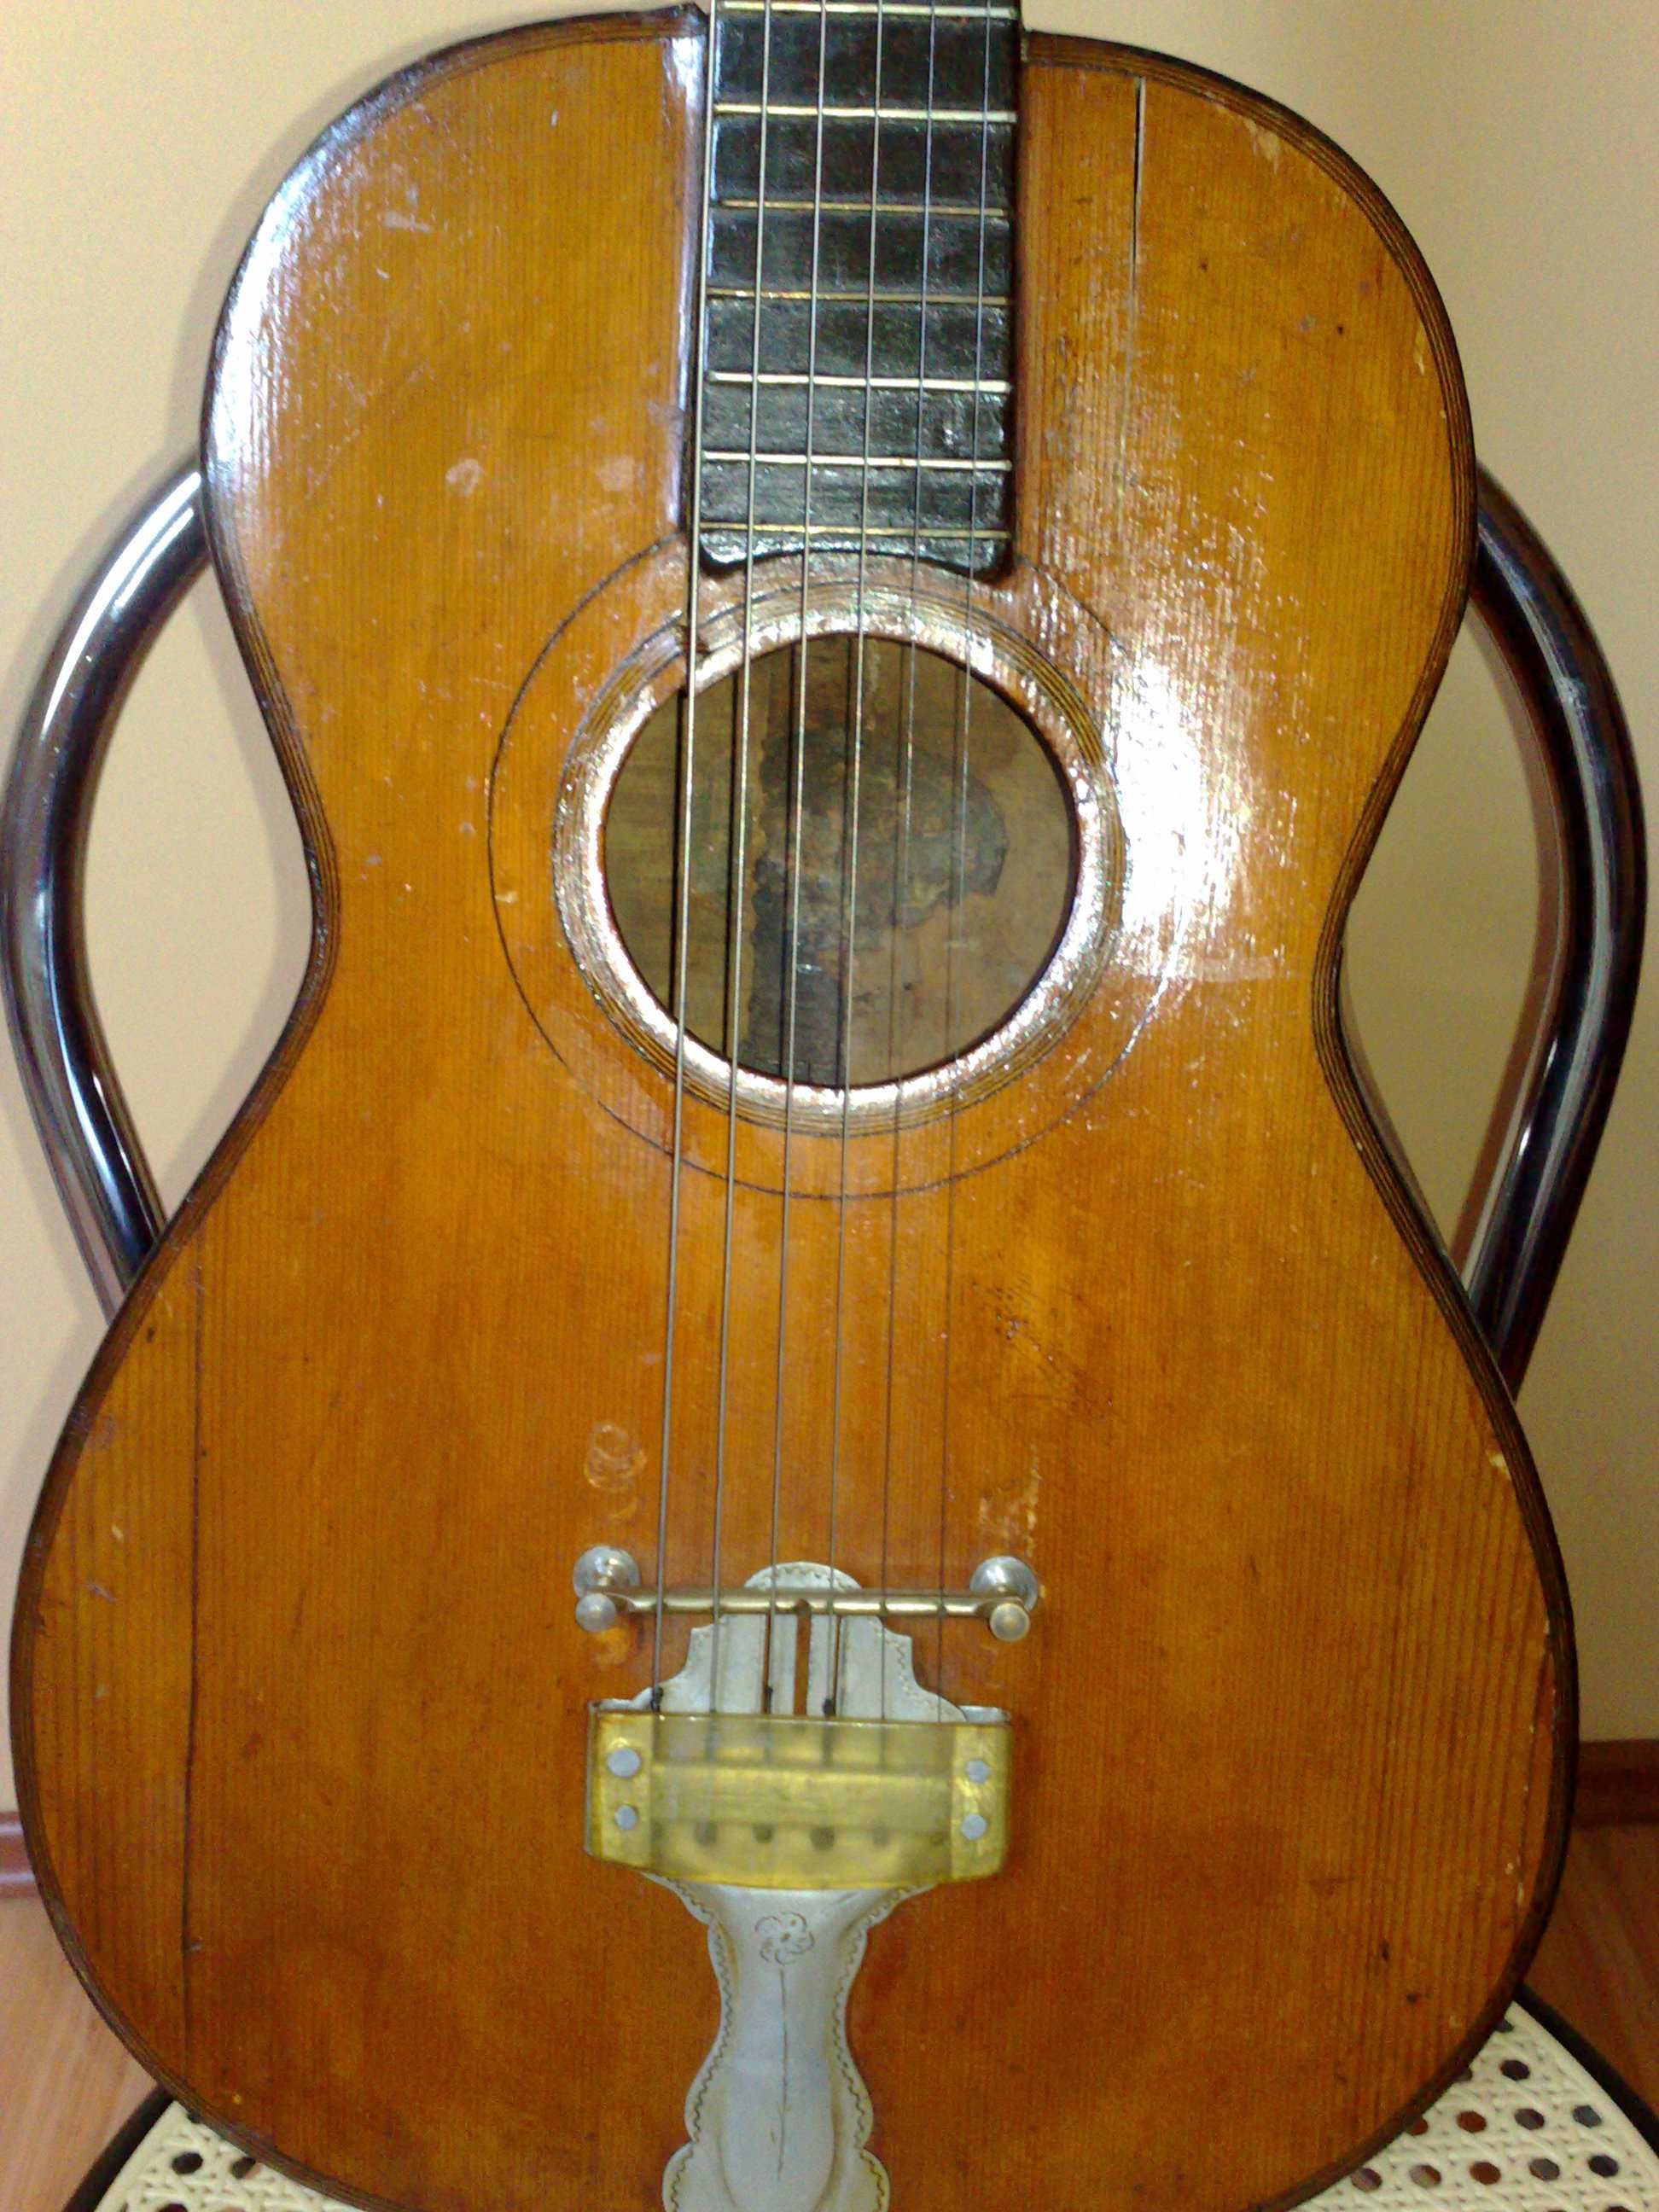 Chitara din lemn veche din anii 70 - 80